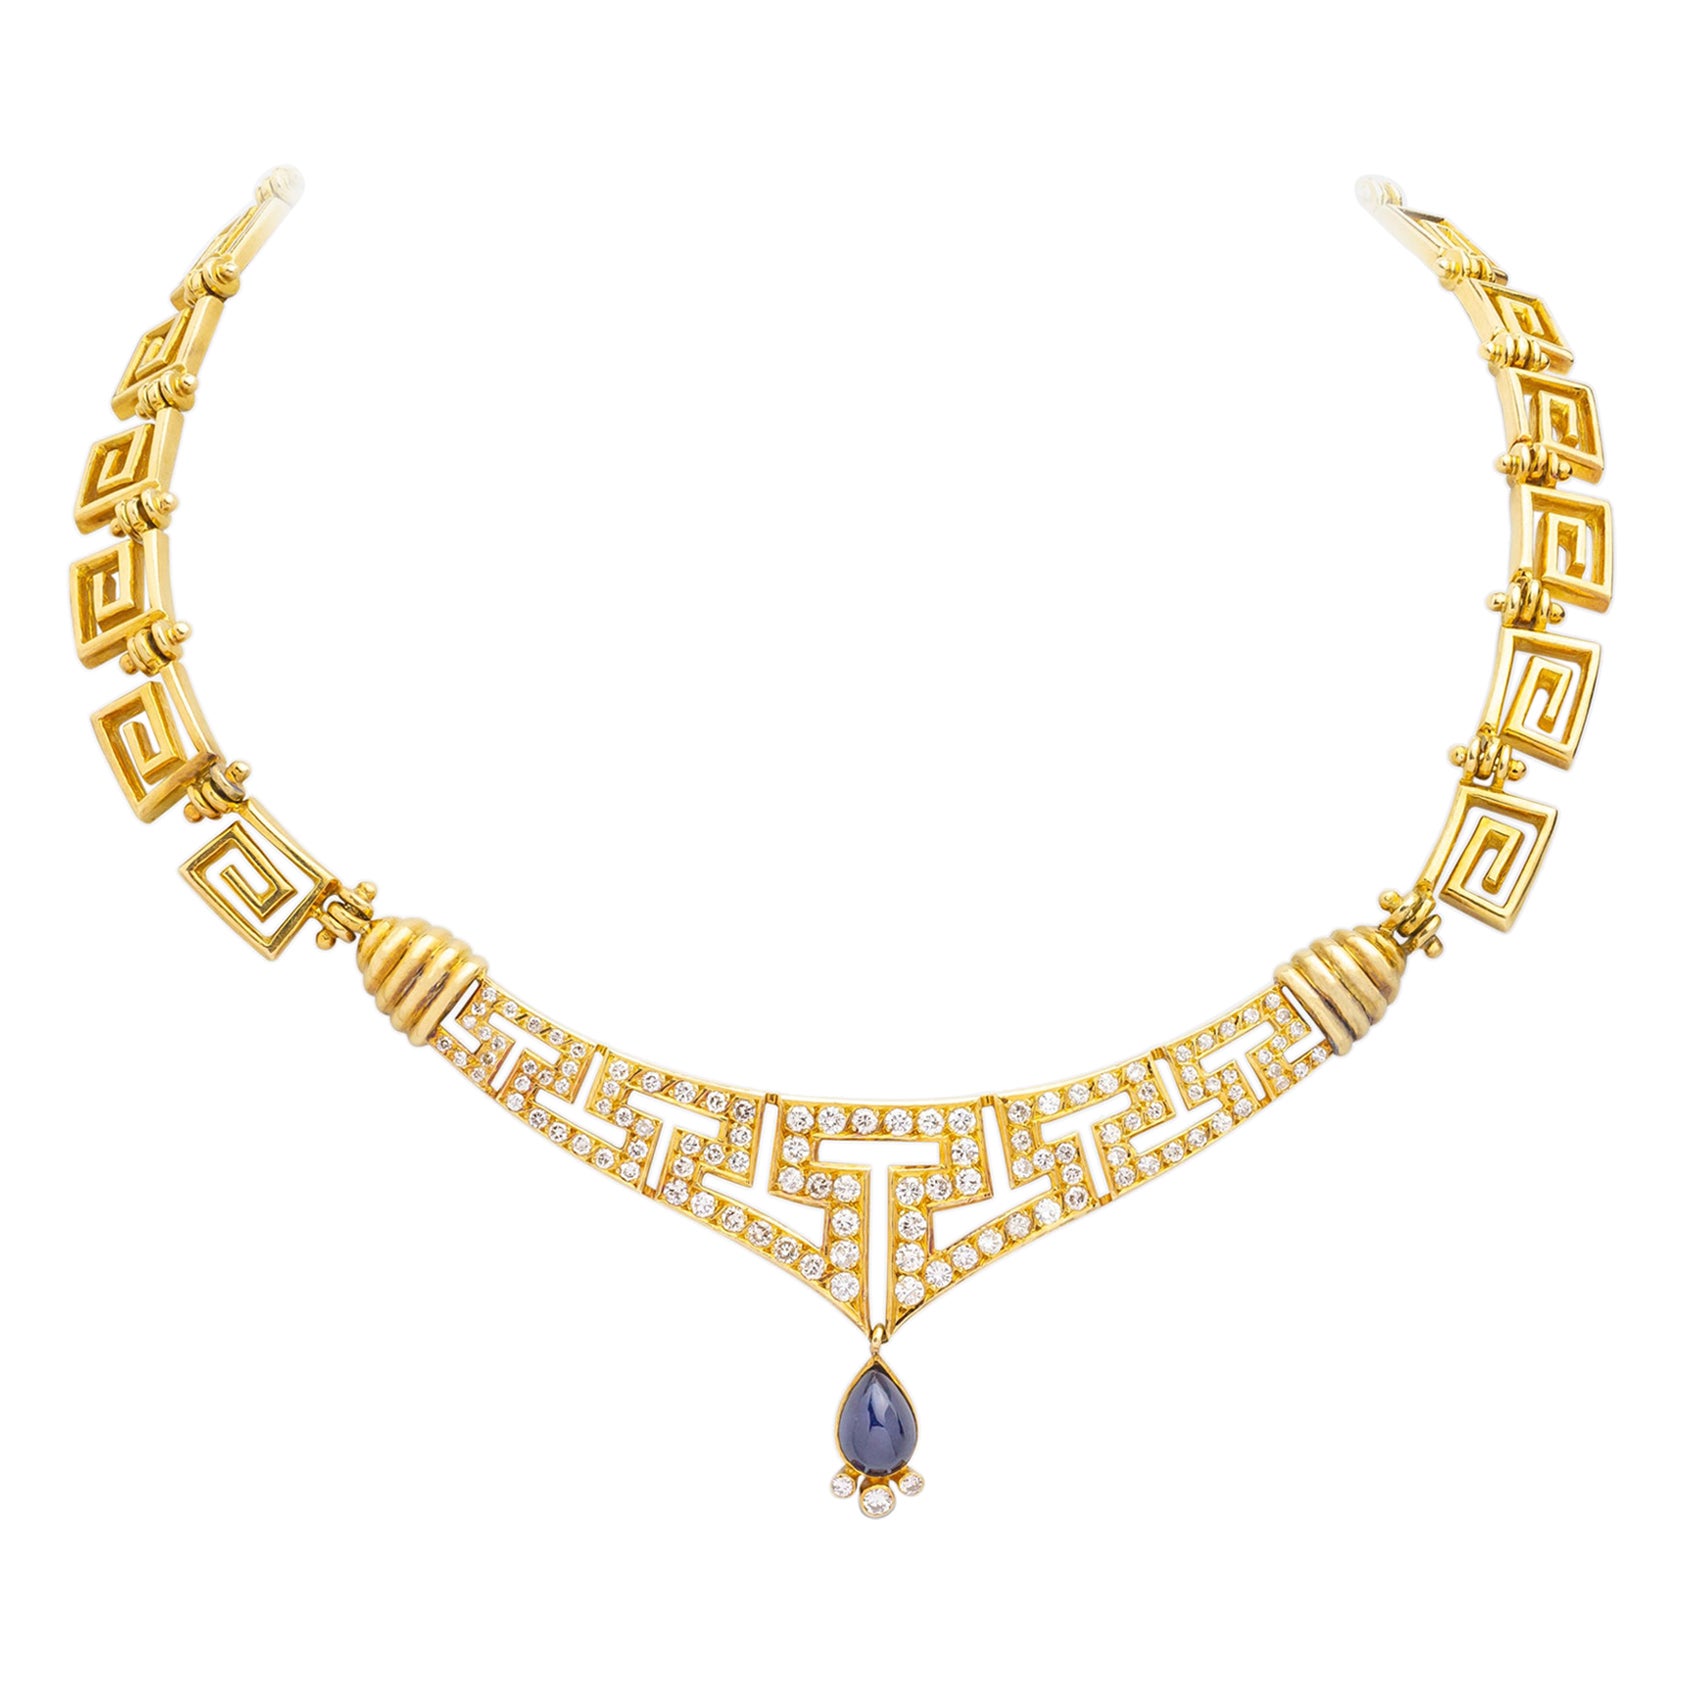 Greek Key Necklet in 18 Karat Gold With Diamonds & a Central Sapphire